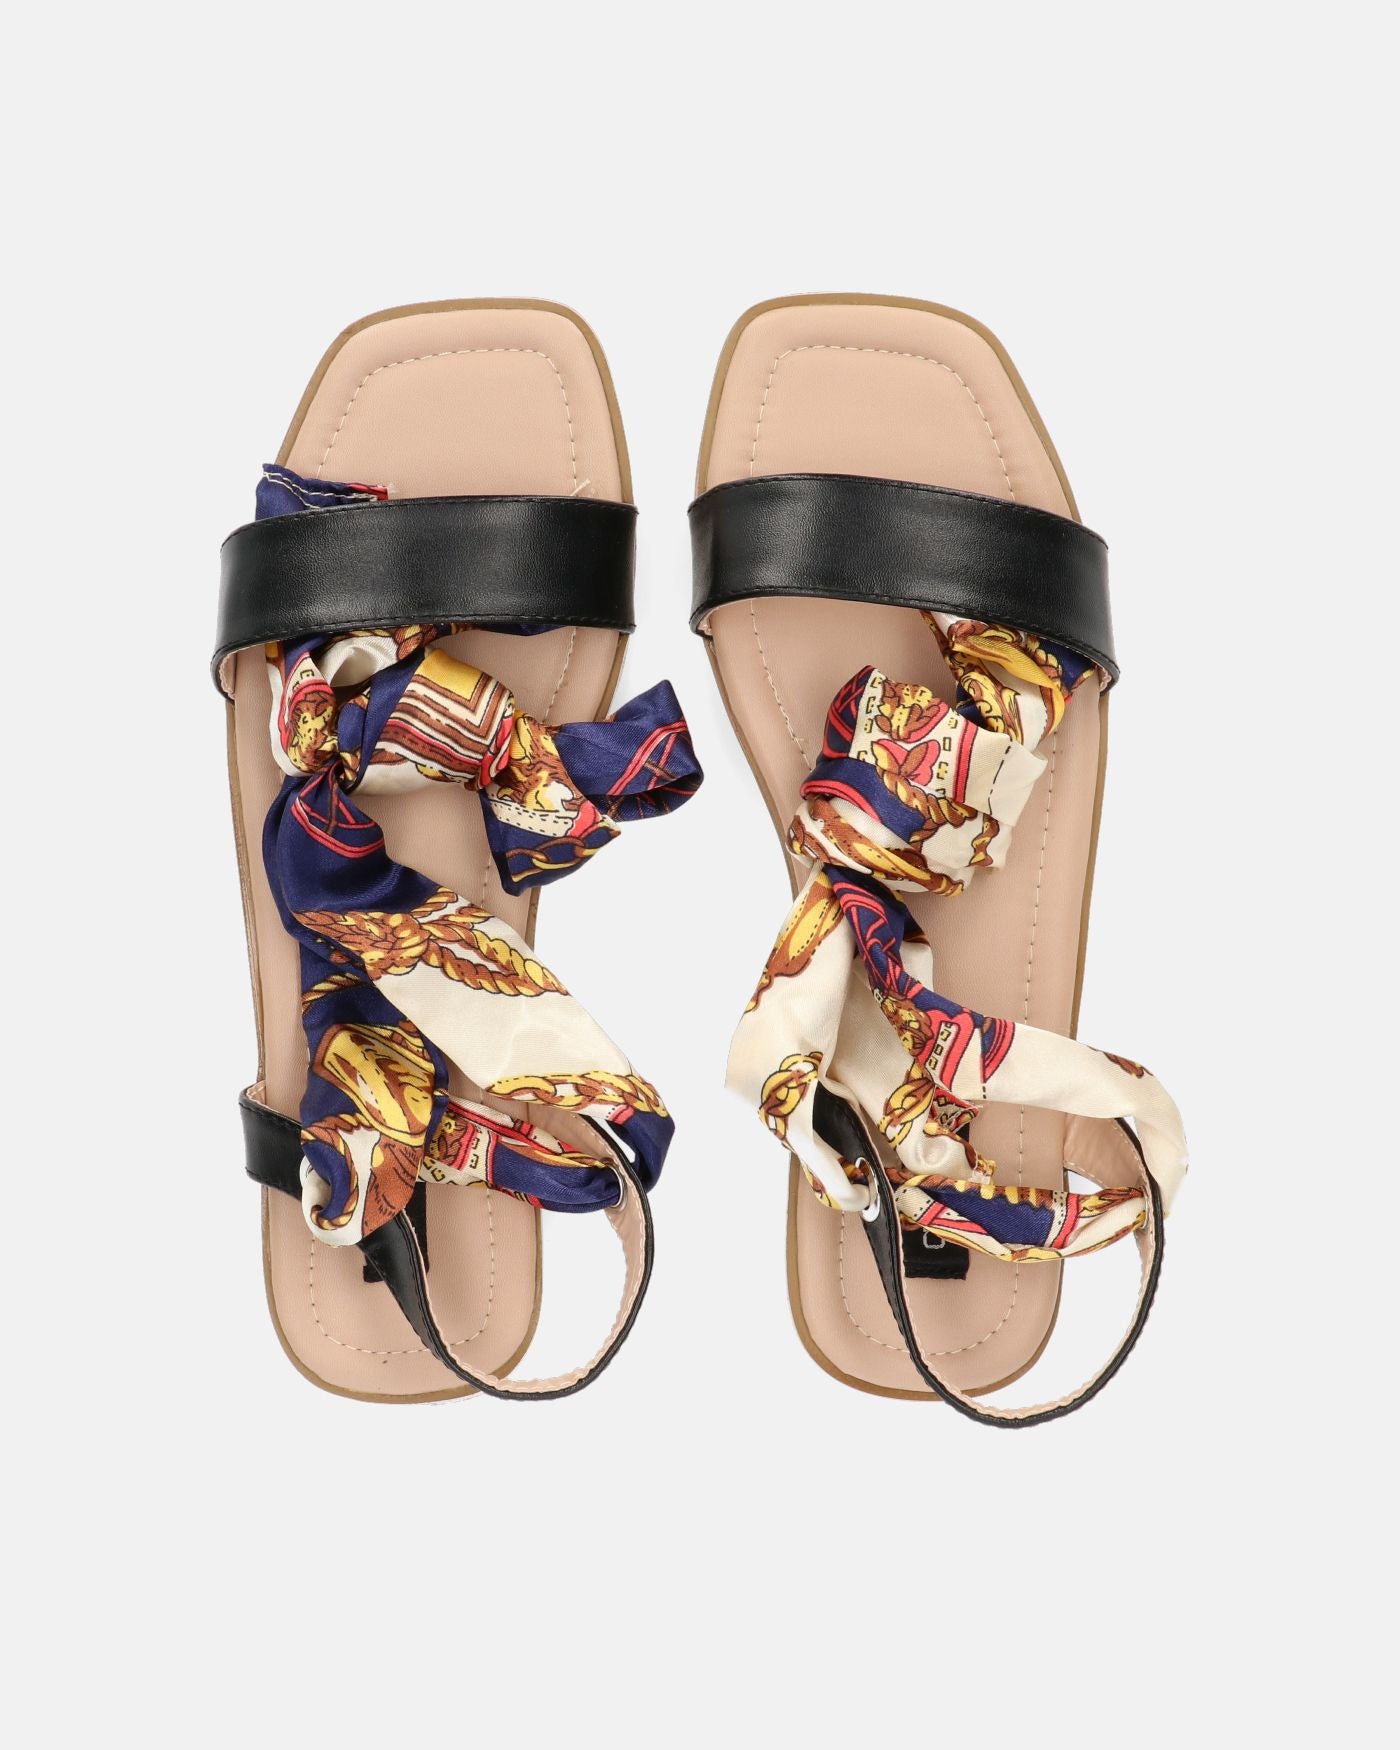 ARIANA - sandali neri con lacci in stile foulard